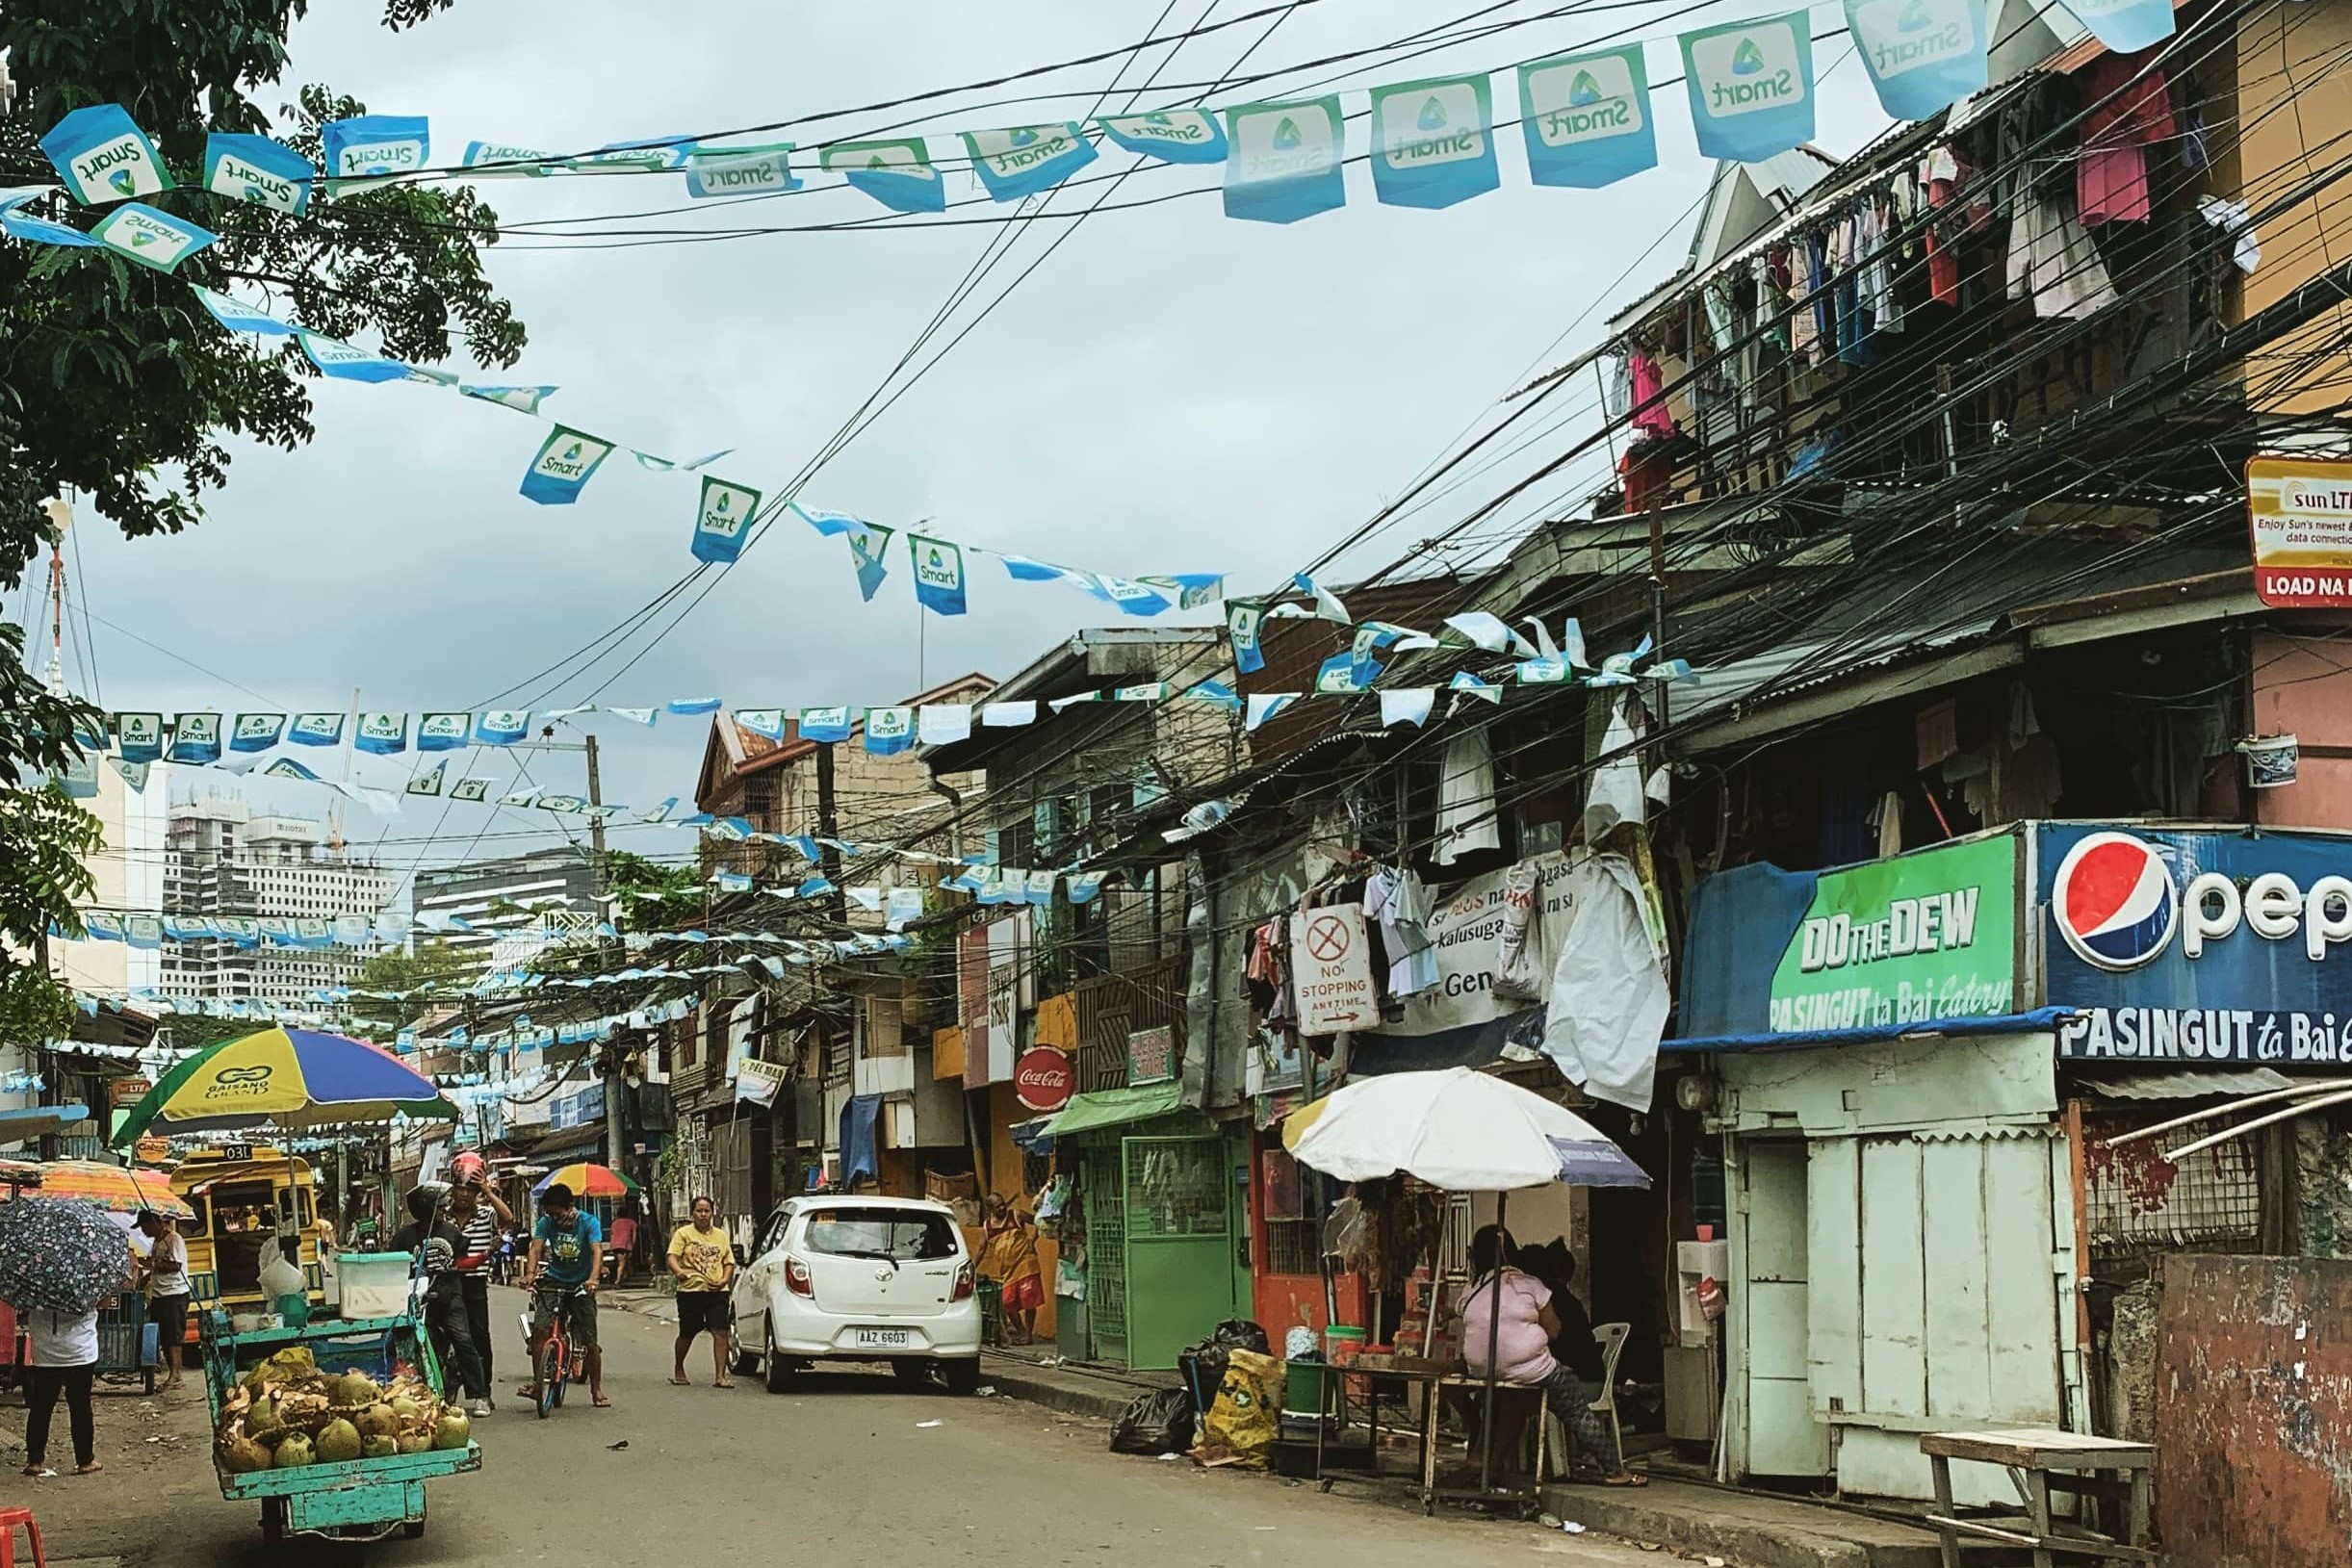 Cebu Residential Area Strolling